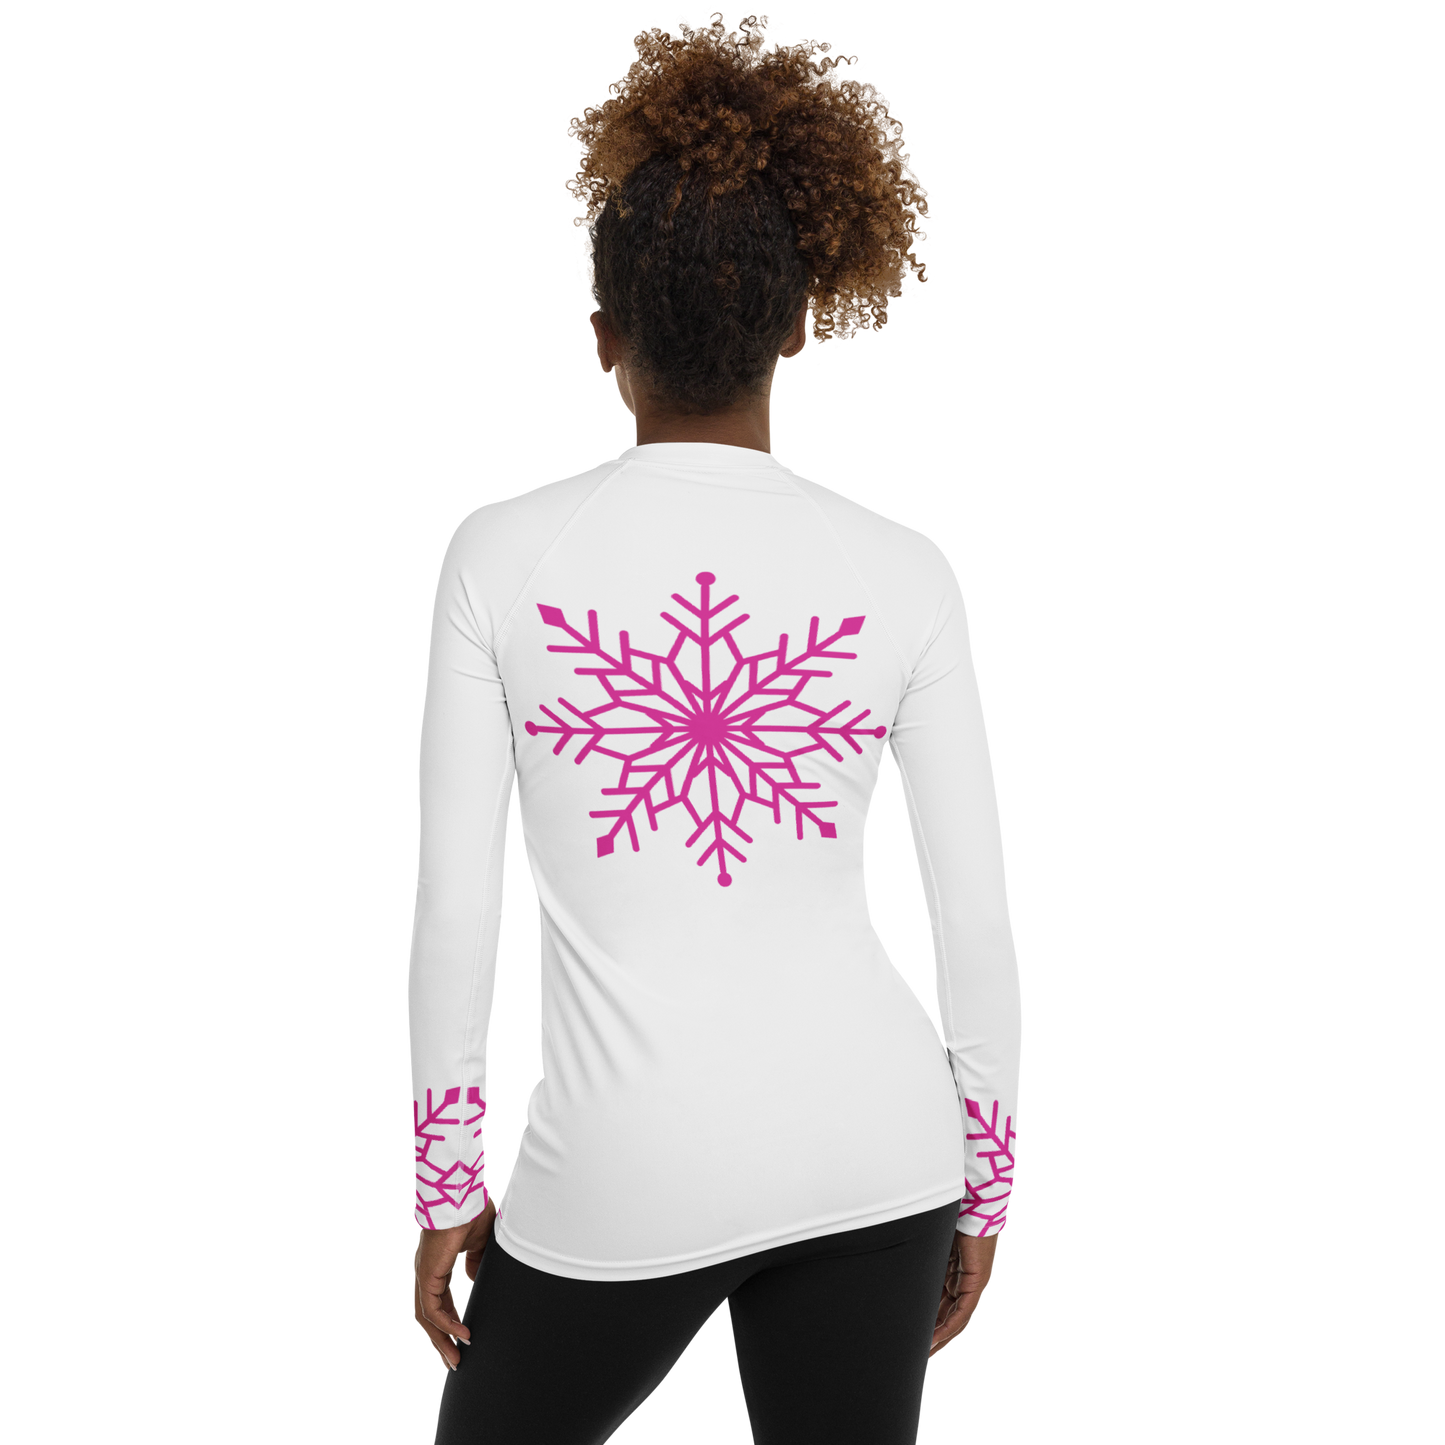 Winter Snowflake Top, Hot Pink Snowflake on White Women's Rash Guard, Holiday Top